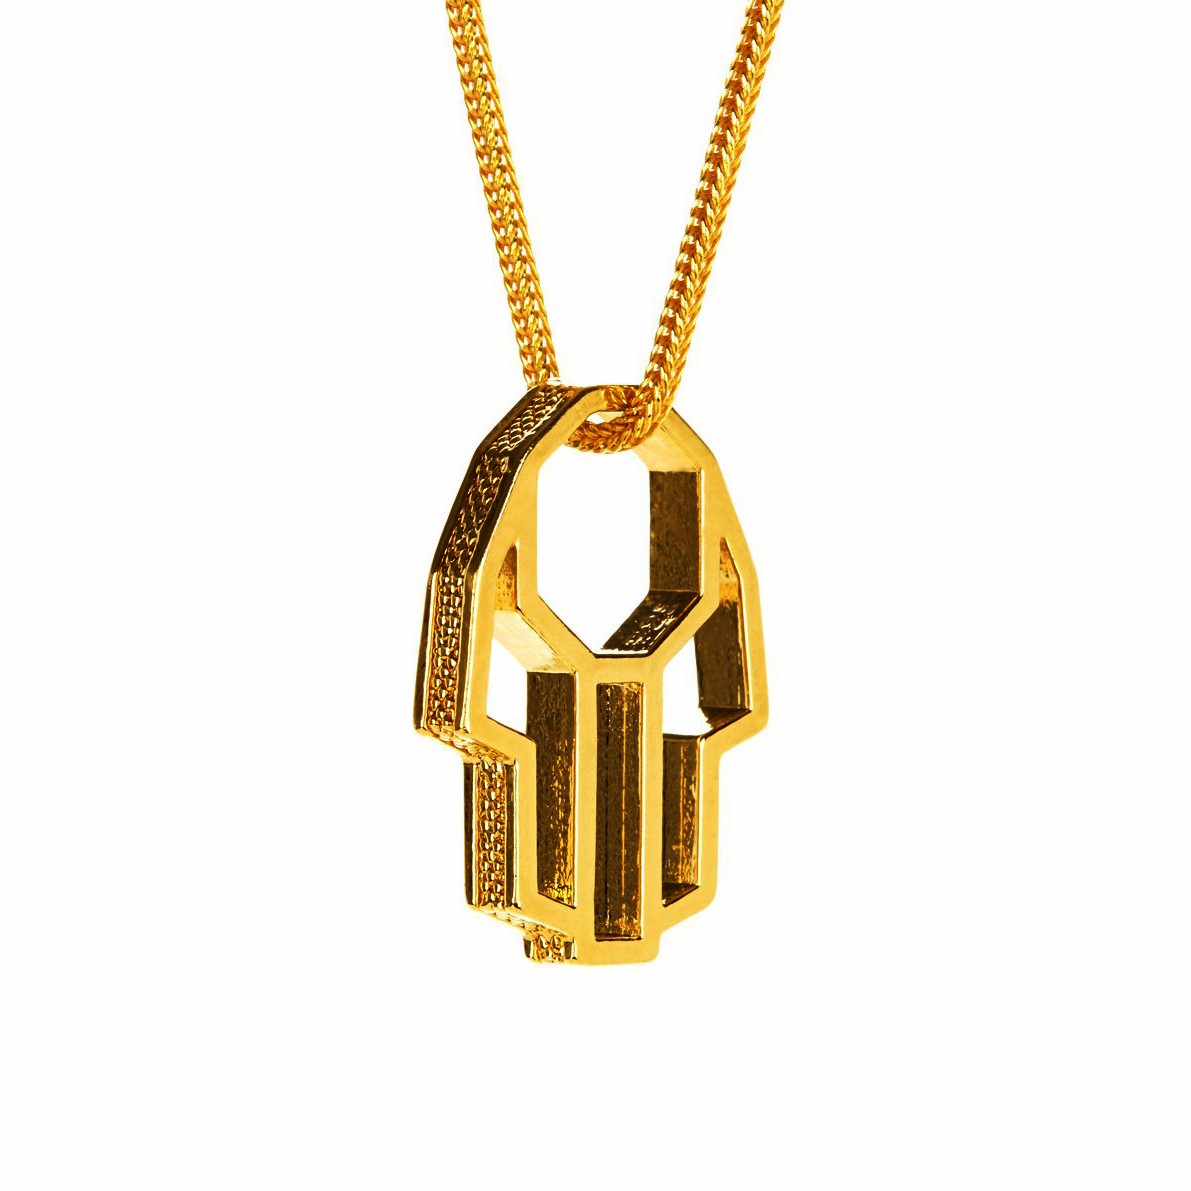 Perepaix Mens Necklace Hamsa Pendant Amulet Gold Plated, $249 @amazon.com